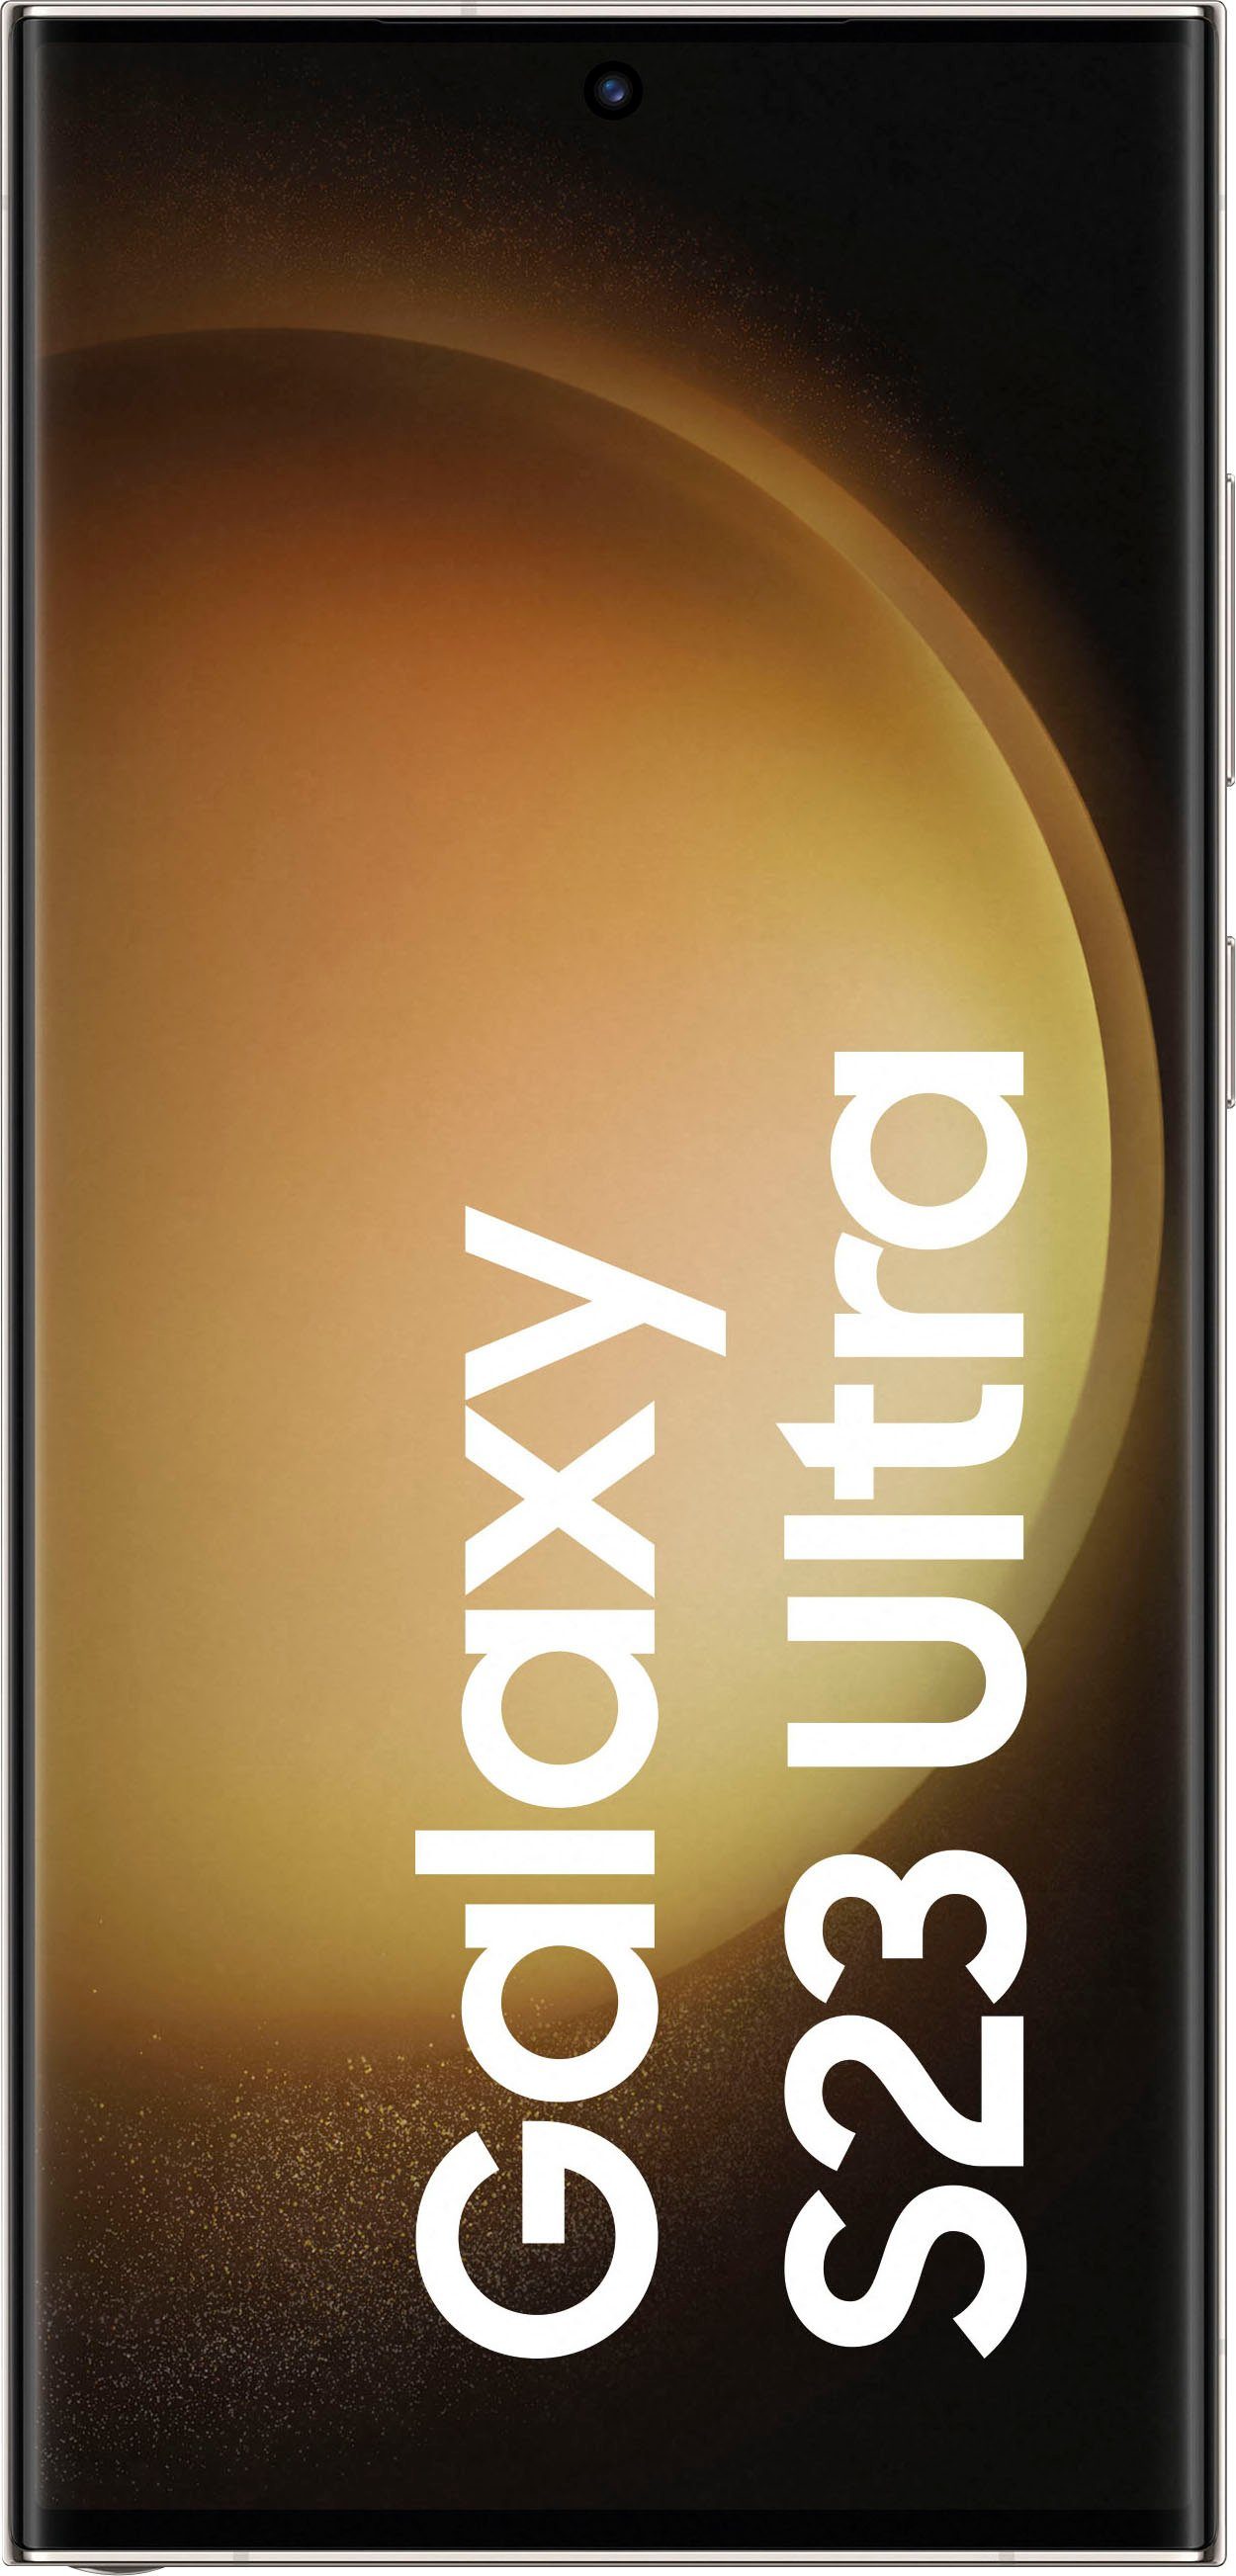 Samsung Galaxy S23 Ultra cm/6,8 Beige Zoll, MP 200 Speicherplatz, GB 512 Kamera) Smartphone (17,31